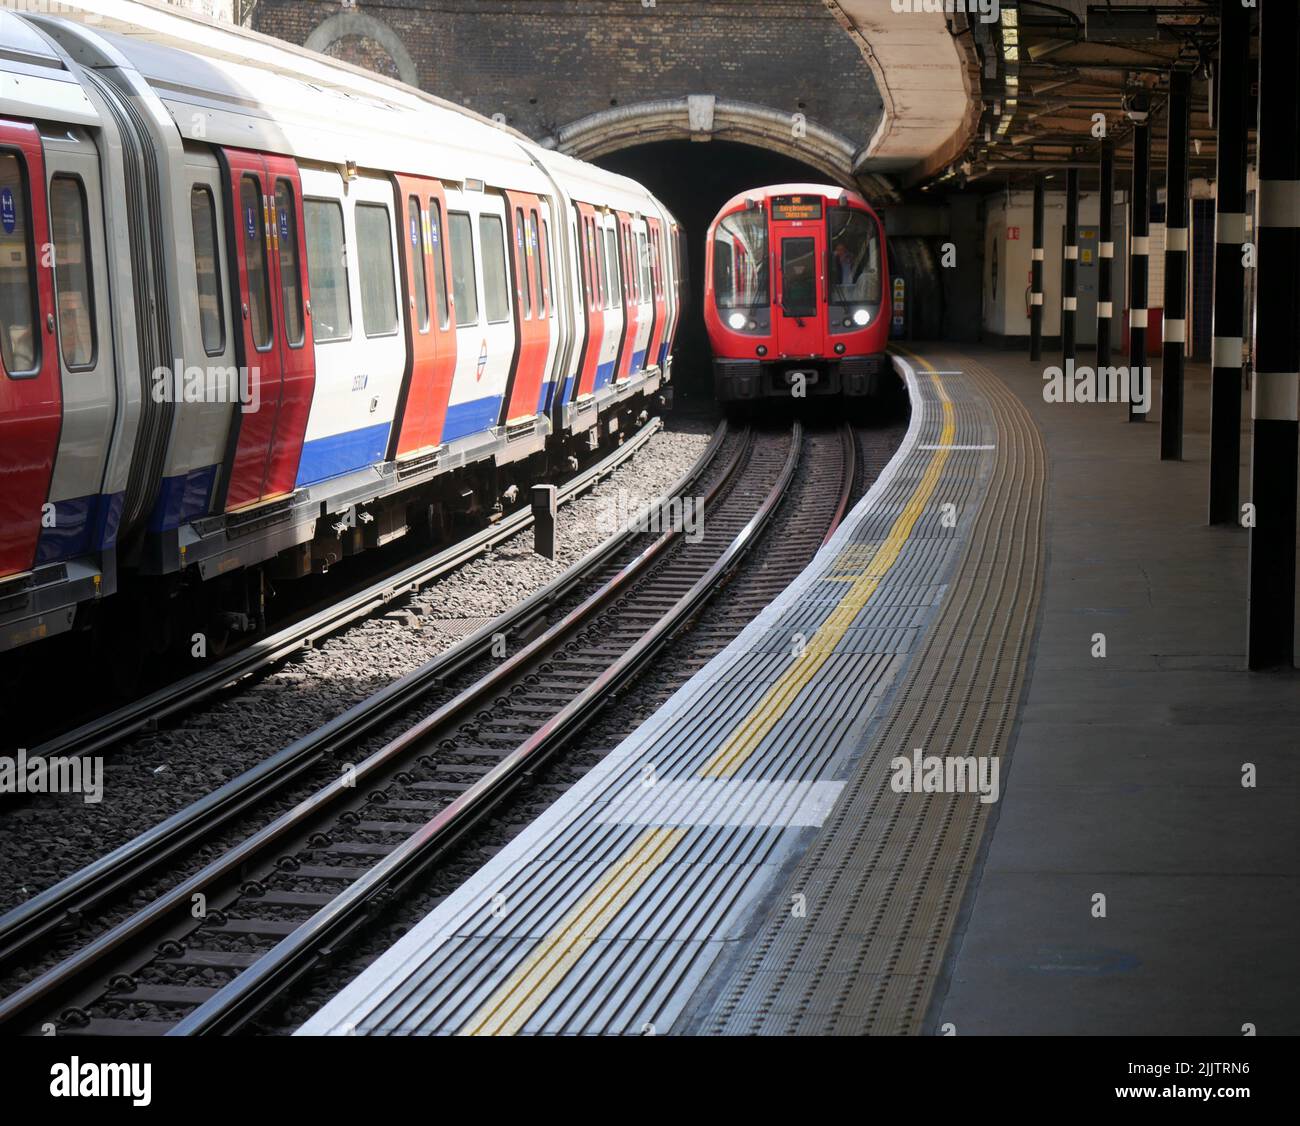 Tube train arriving at Sloane Square Station, Chelsea, London Stock Photo